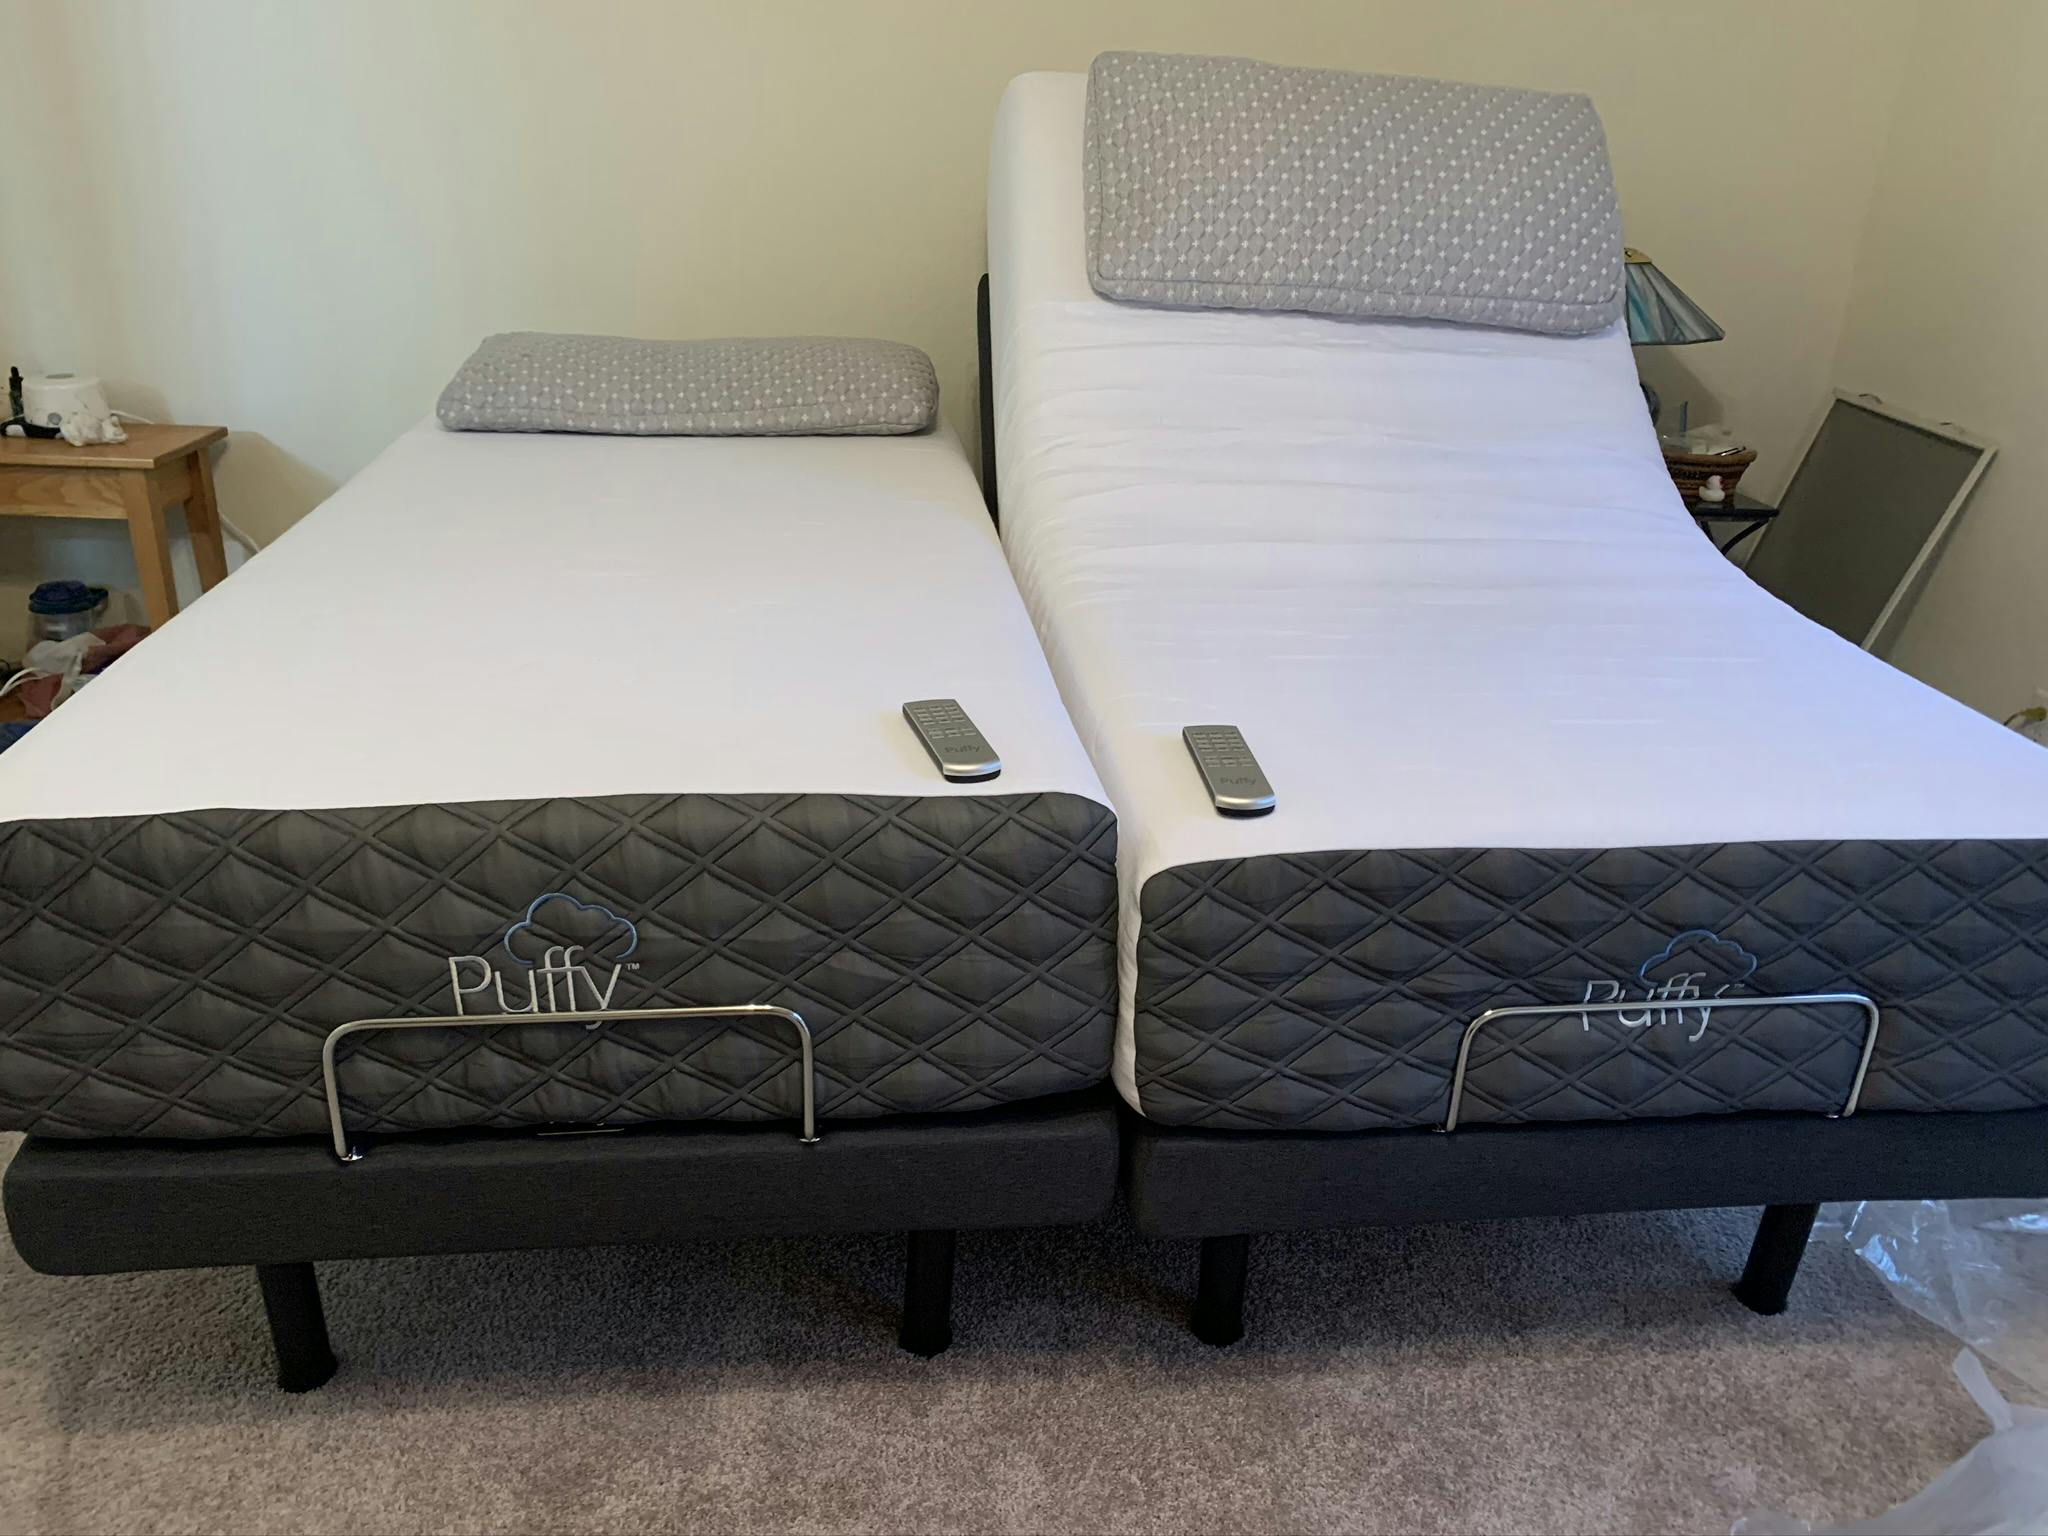 puffy mattress ratings and reviews